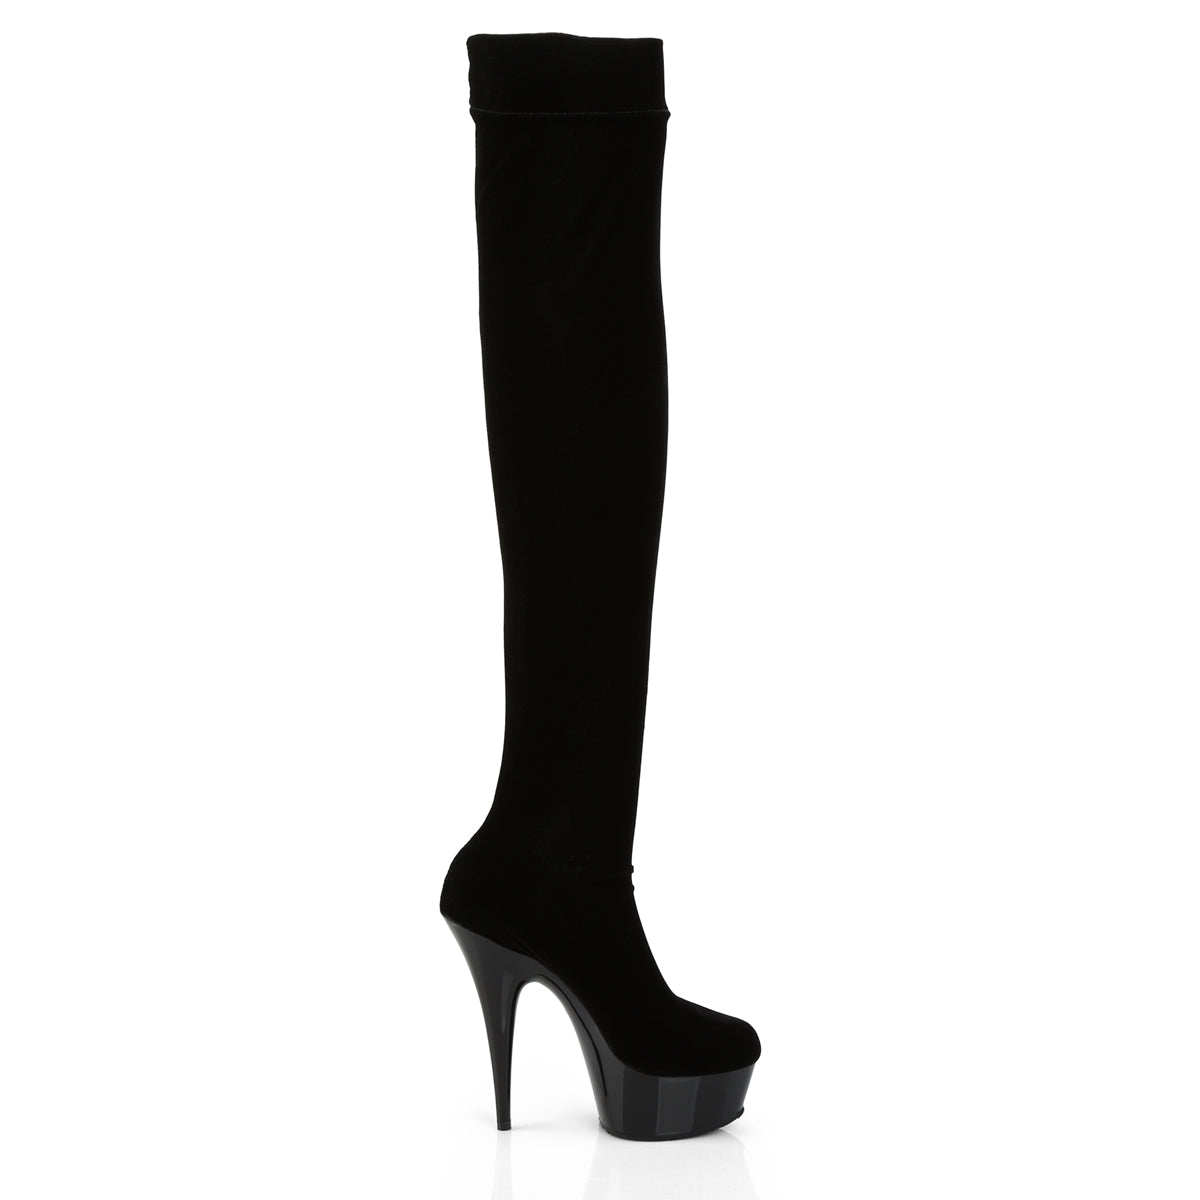 DELIGHT-3002 6" Heel Black Stretch Velvet Pole Dancer Boots-Pleaser- Sexy Shoes Fetish Heels